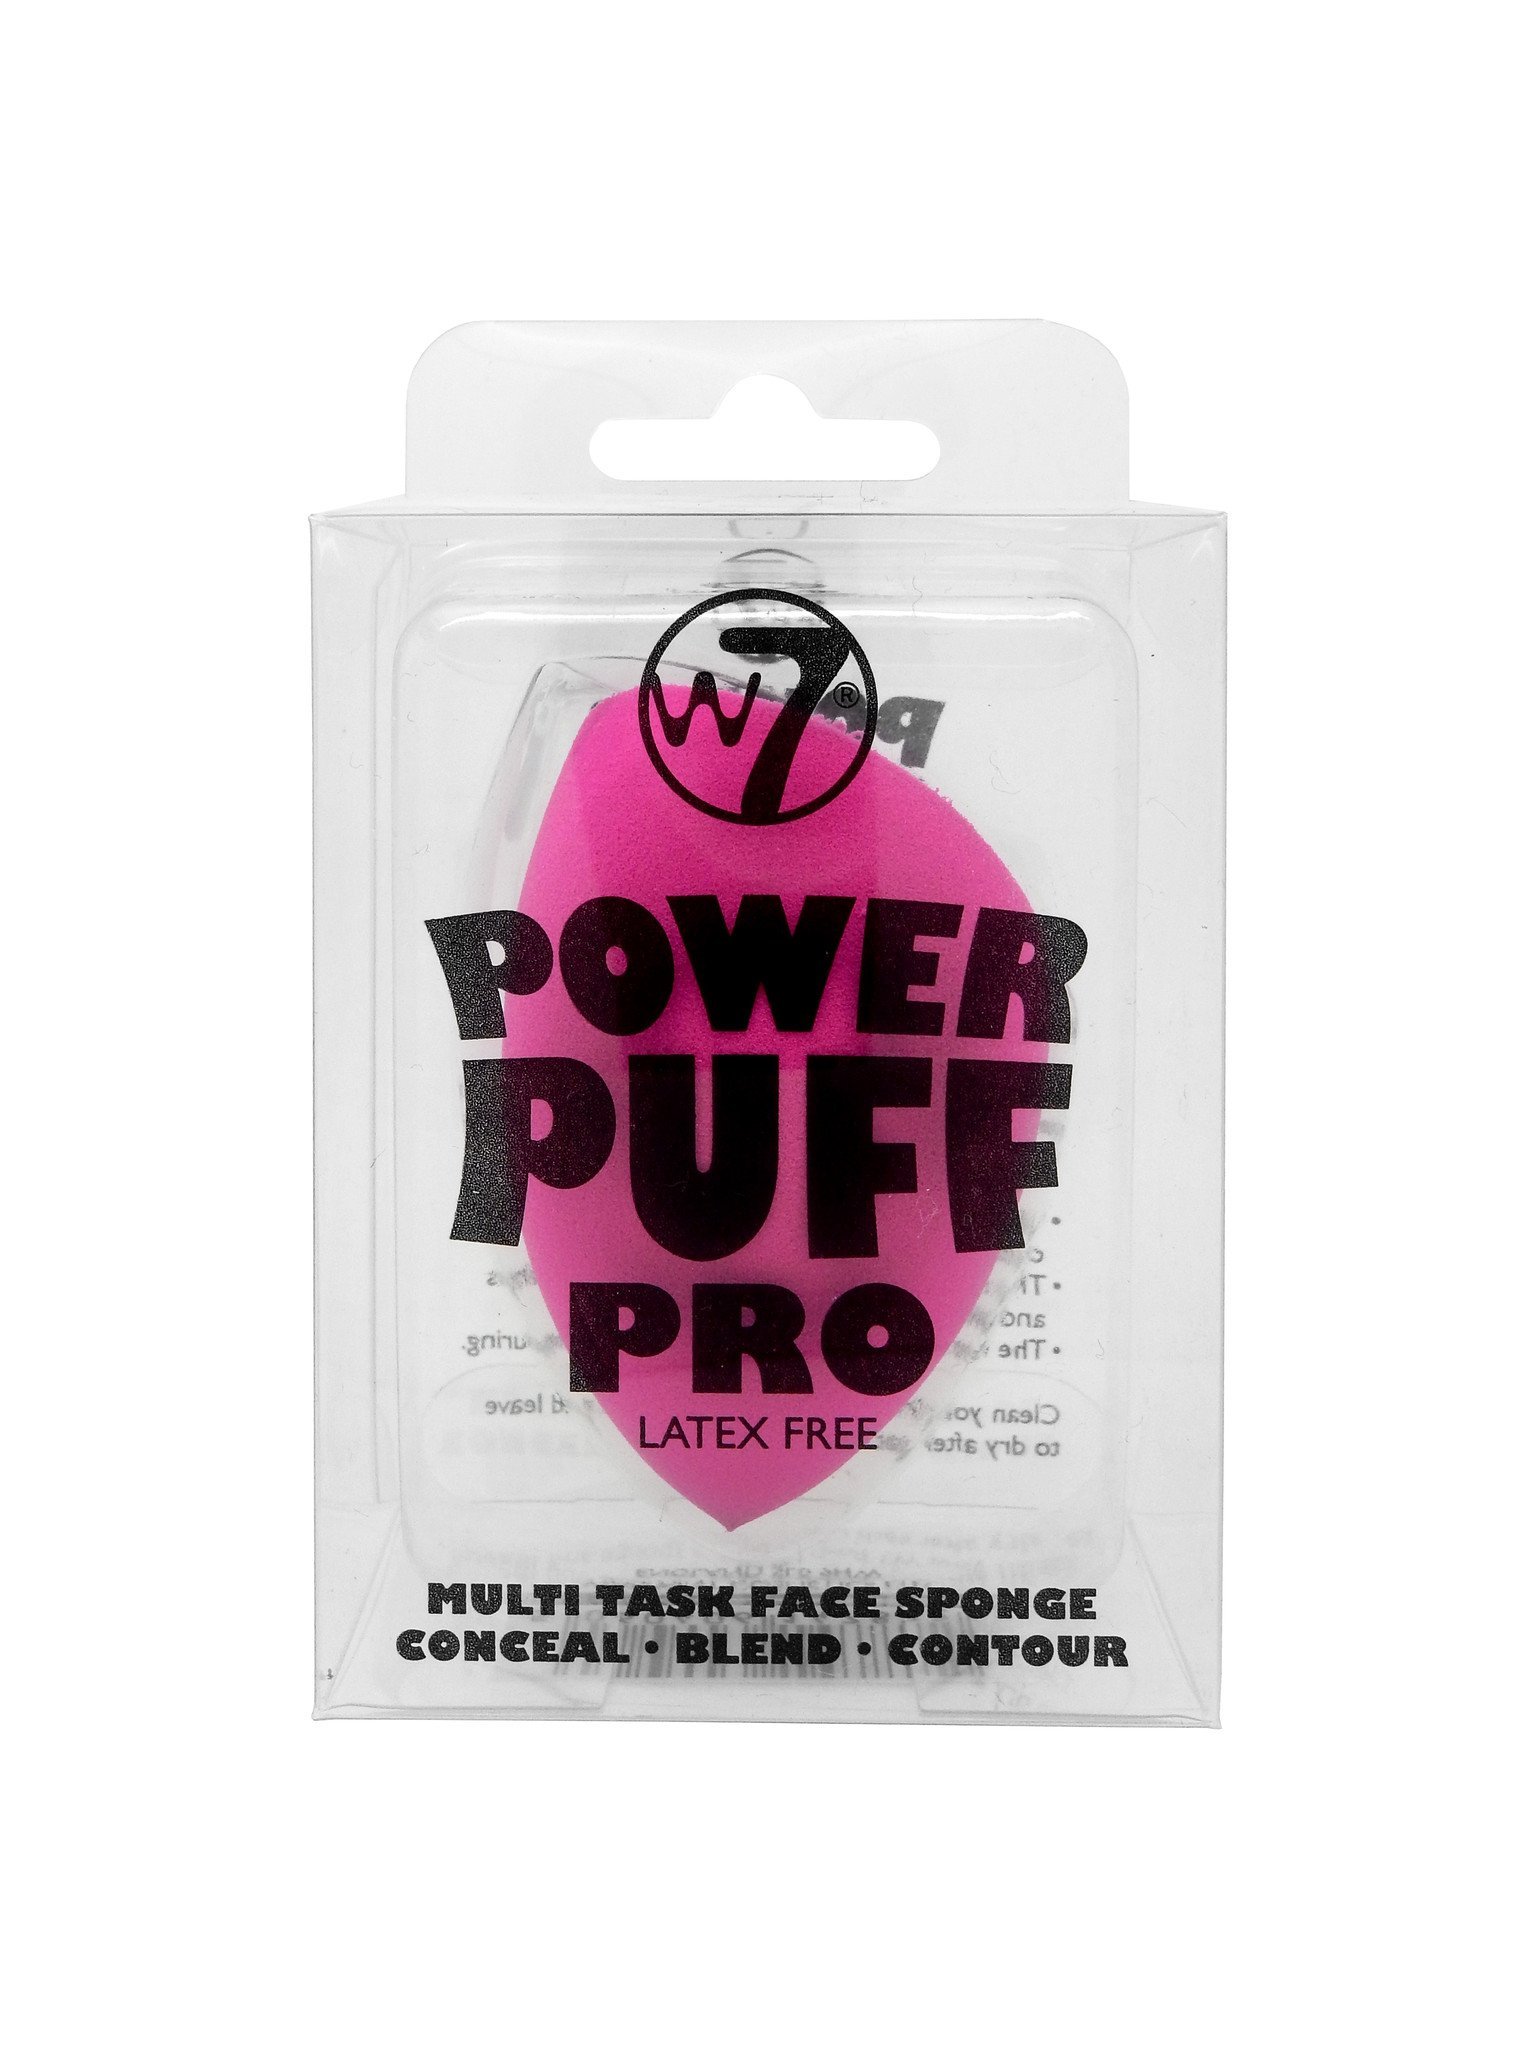 W7 Power puff pro